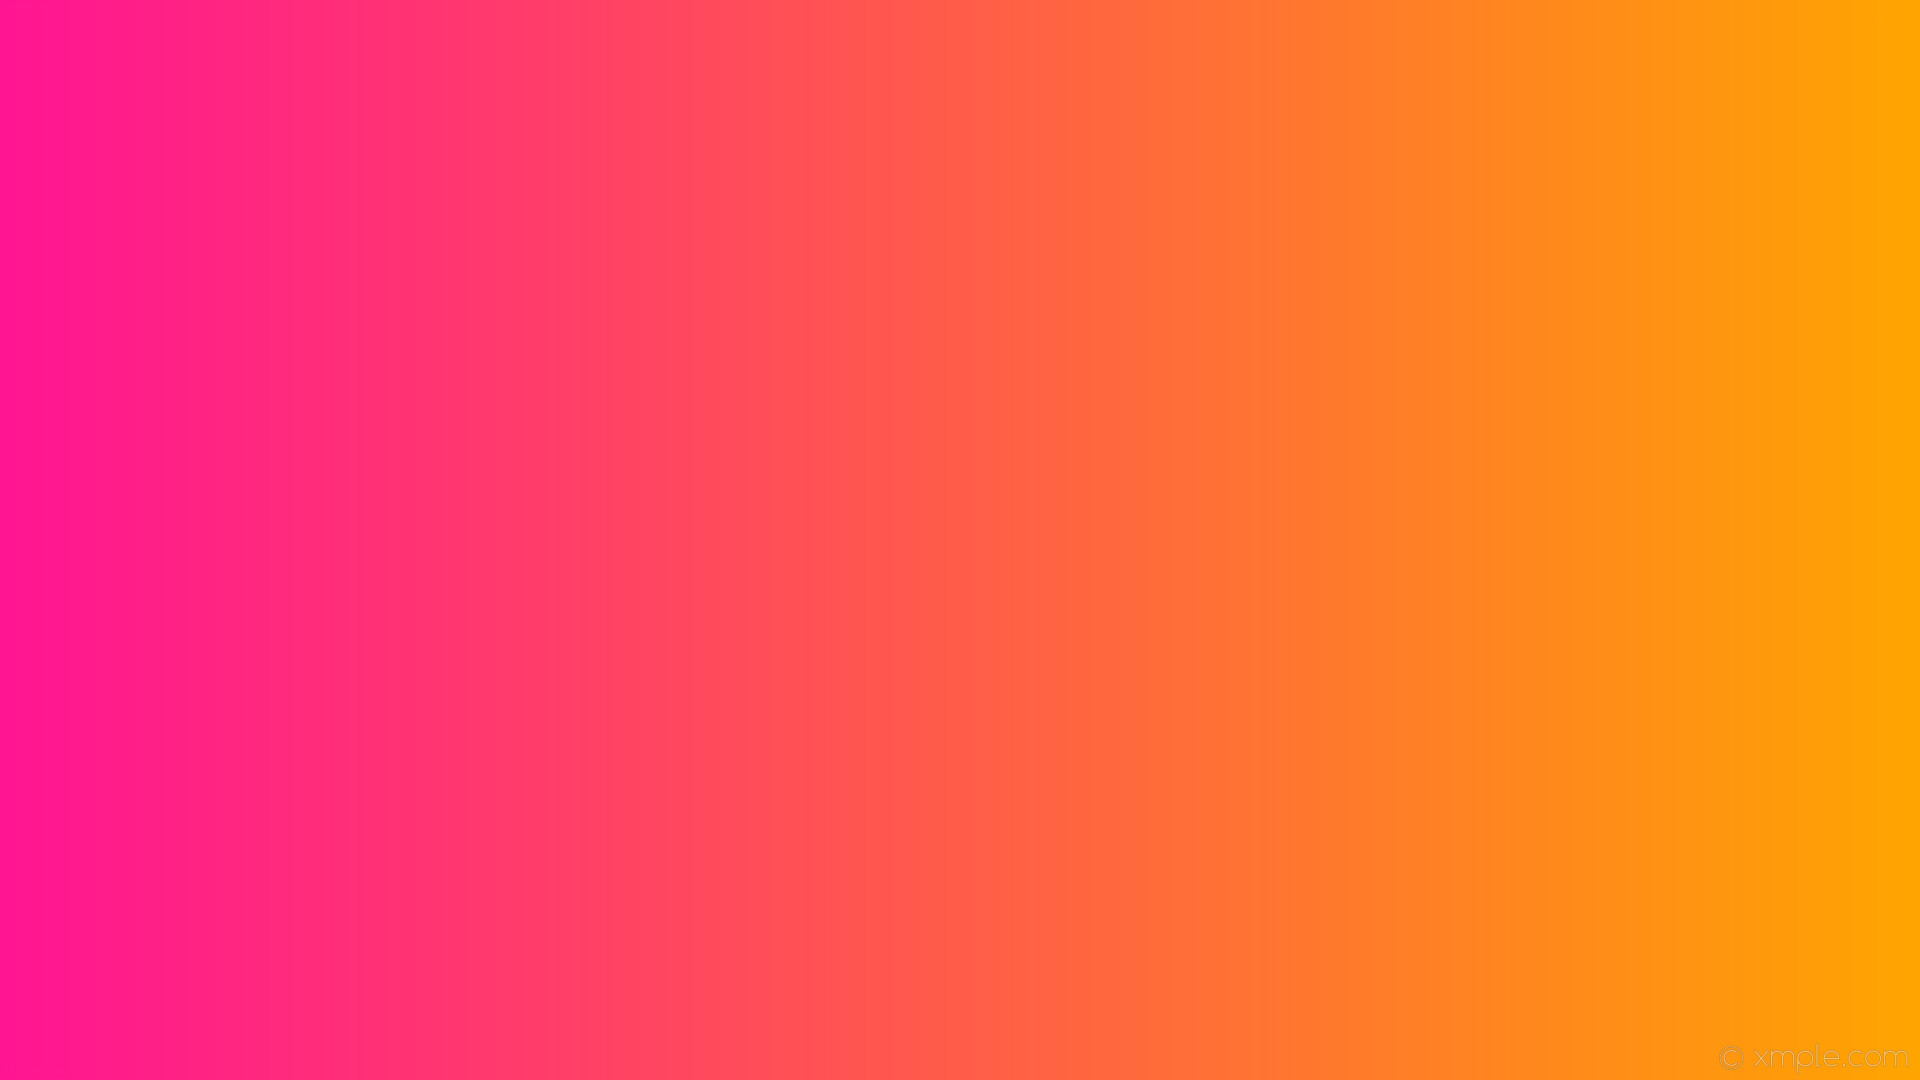 1920x1080 wallpaper gradient linear pink orange deep pink #ffa500 #ff1493 0Â°